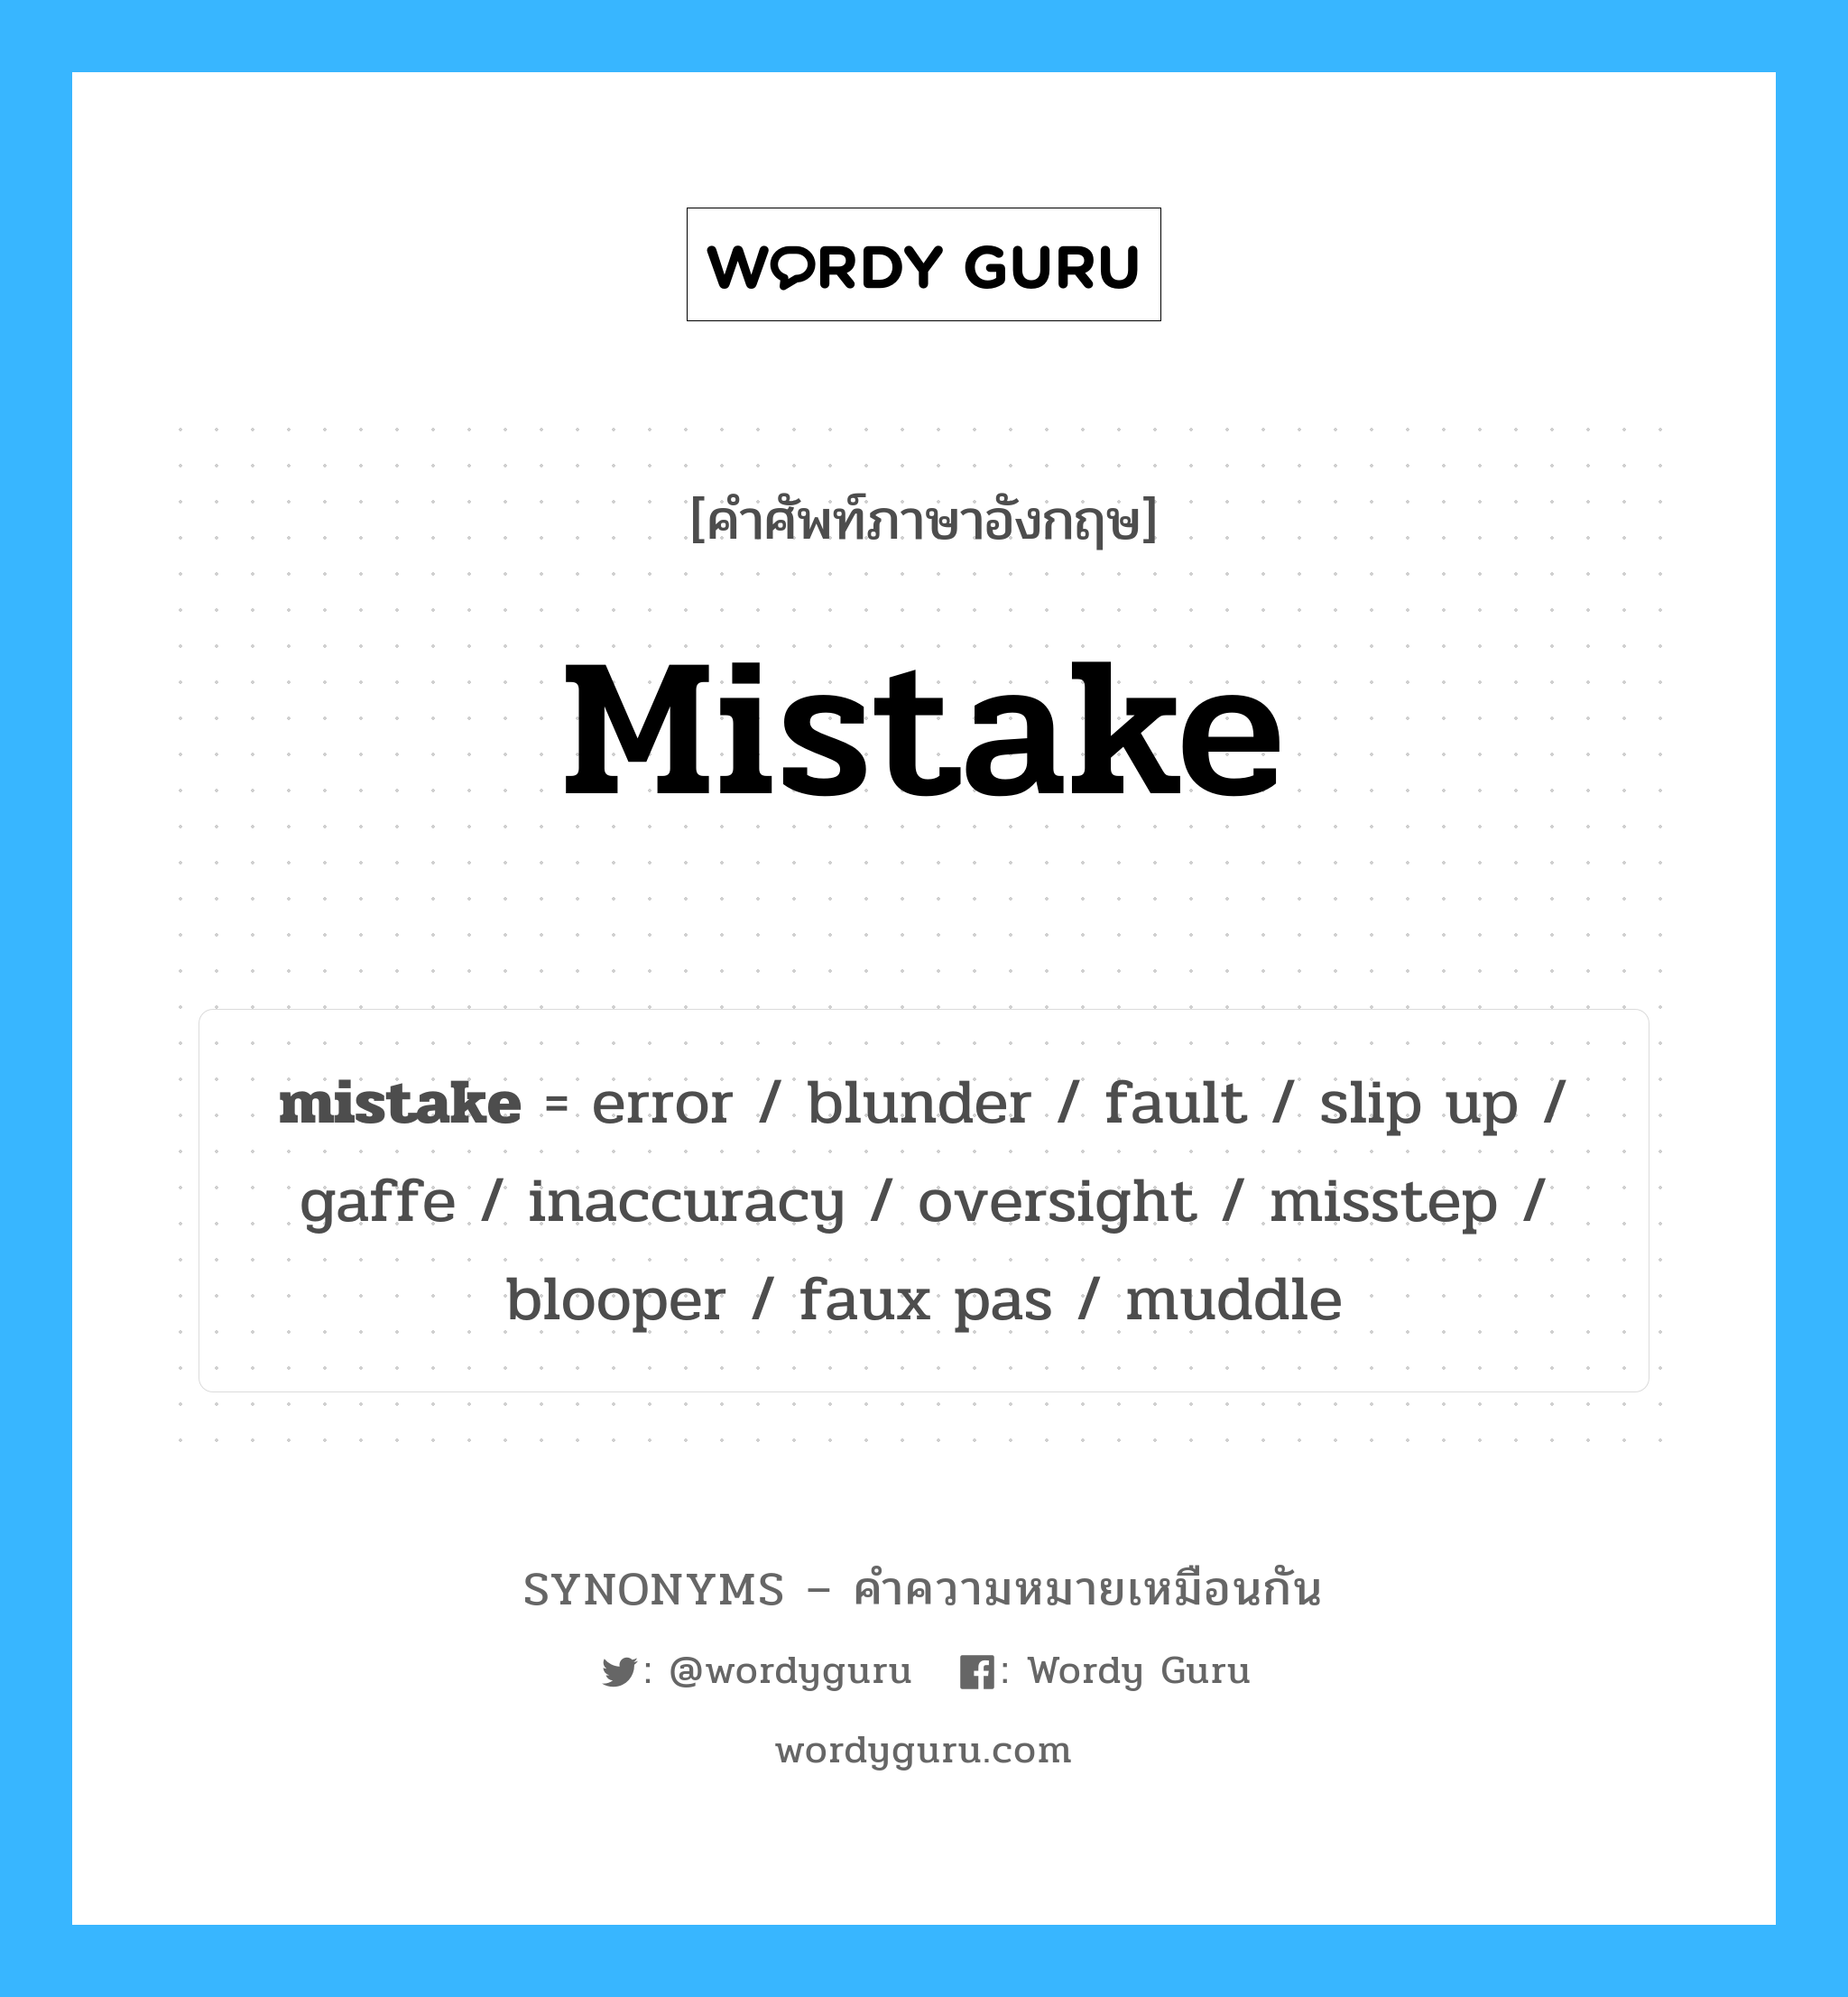 muddle เป็นหนึ่งใน mistake และมีคำอื่น ๆ อีกดังนี้, คำศัพท์ภาษาอังกฤษ muddle ความหมายคล้ายกันกับ mistake แปลว่า ตั้งตัวไม่ติด หมวด mistake